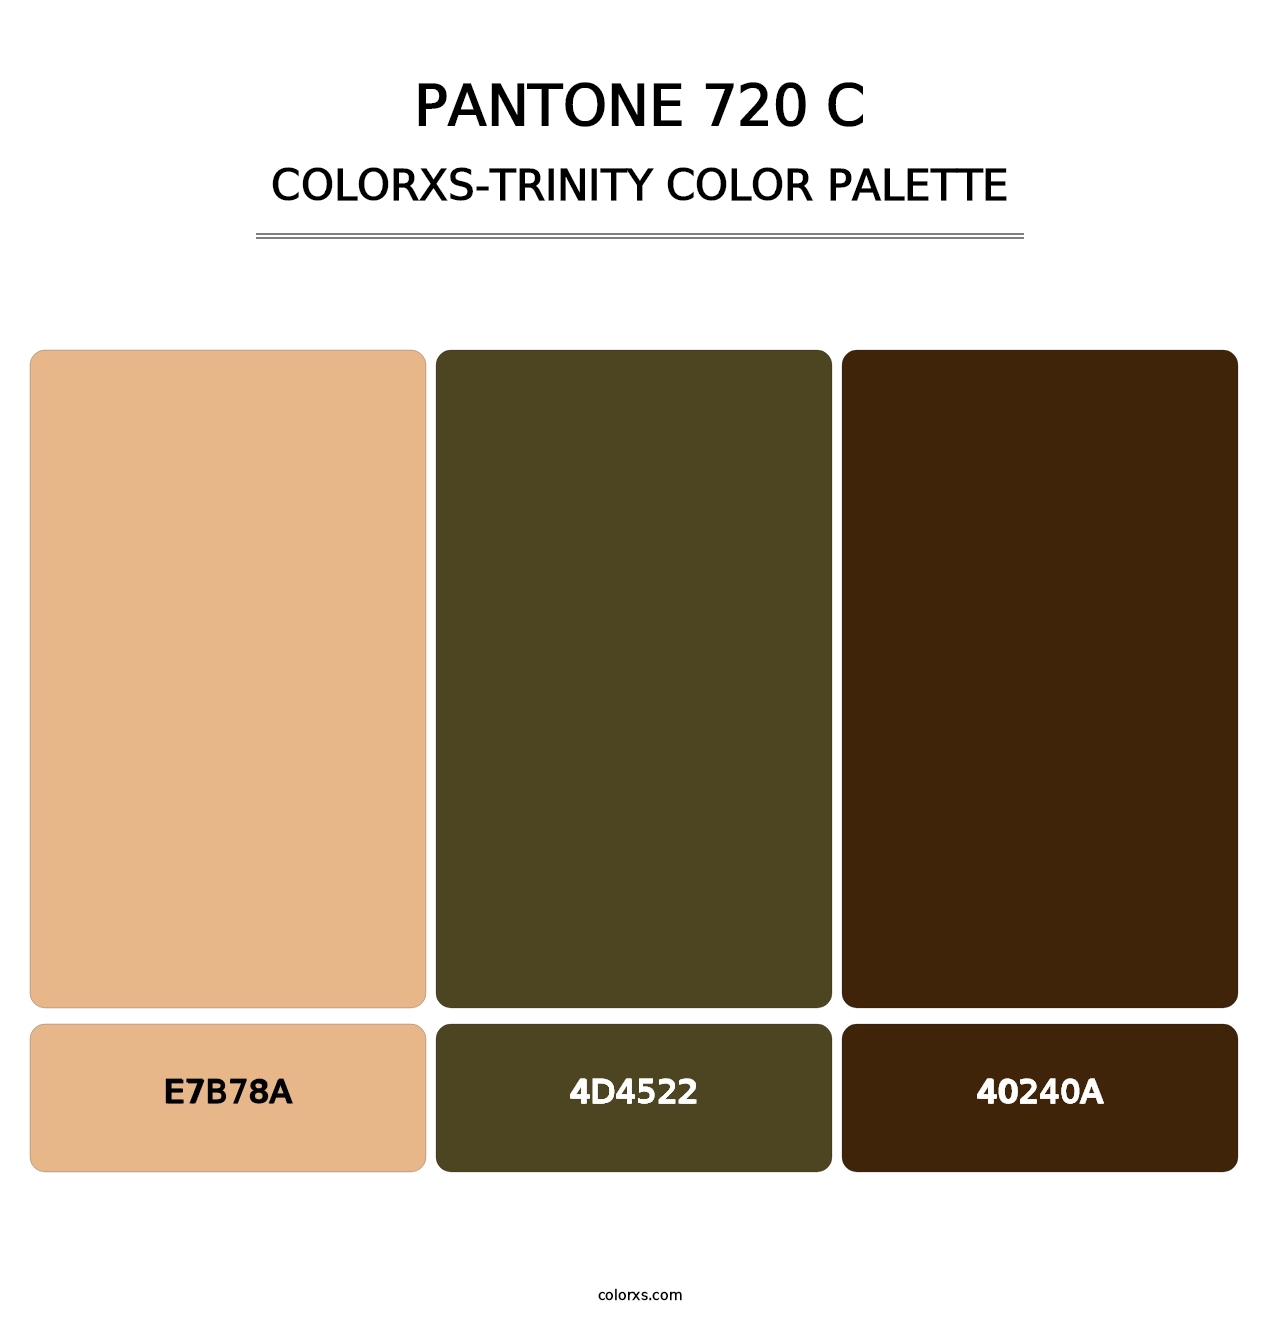 PANTONE 720 C - Colorxs Trinity Palette